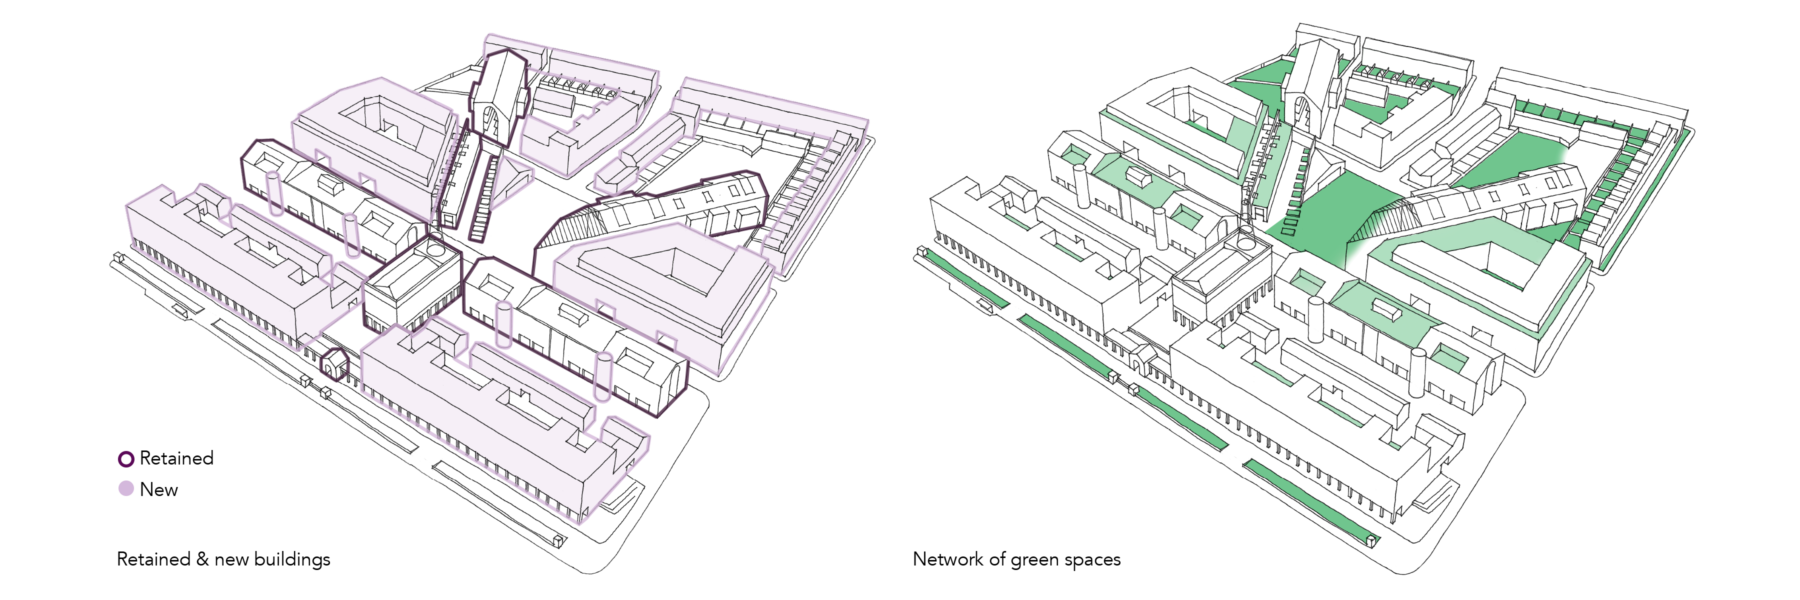 Sarah-Wigglesworth-Architects Unlocking-Pentonville Aerial-View-Analysis Diagram